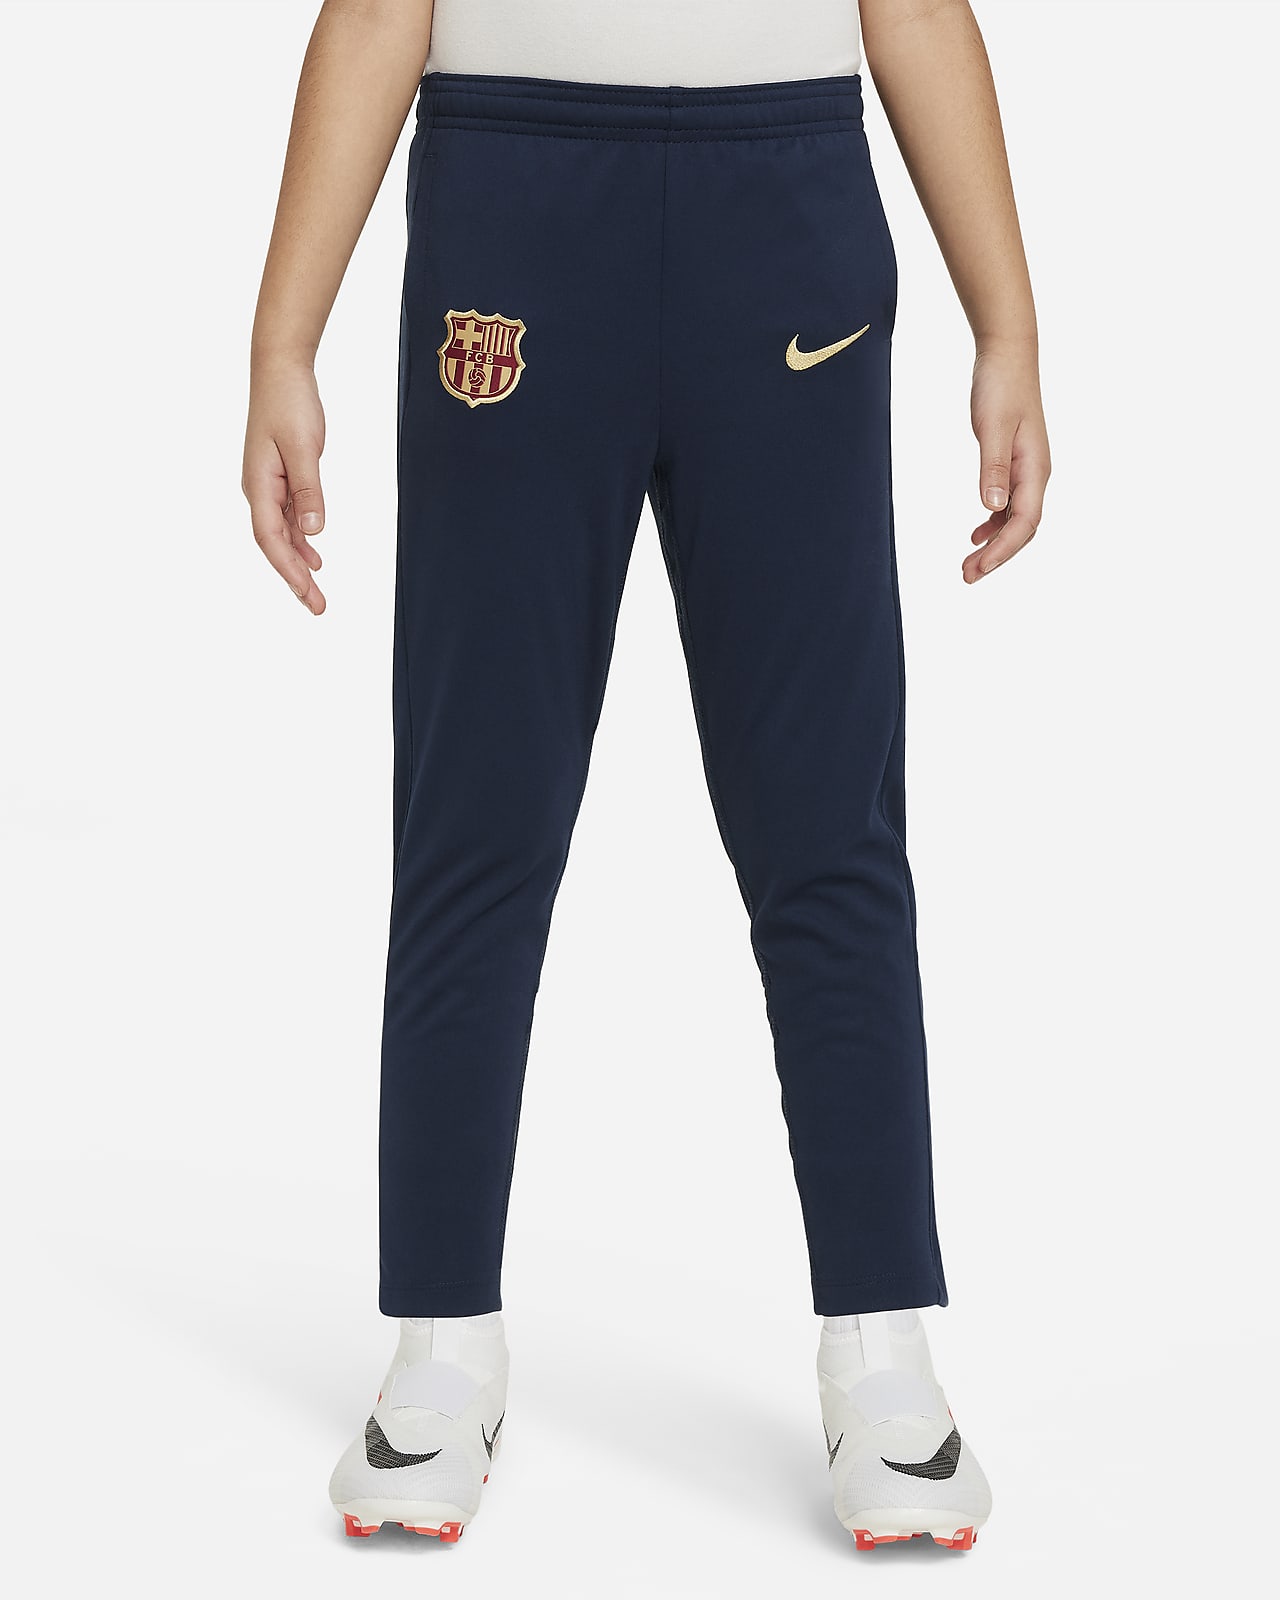 FC Barcelona Academy Pro Nike Fußballhose aus Strickmaterial für jüngere Kinder